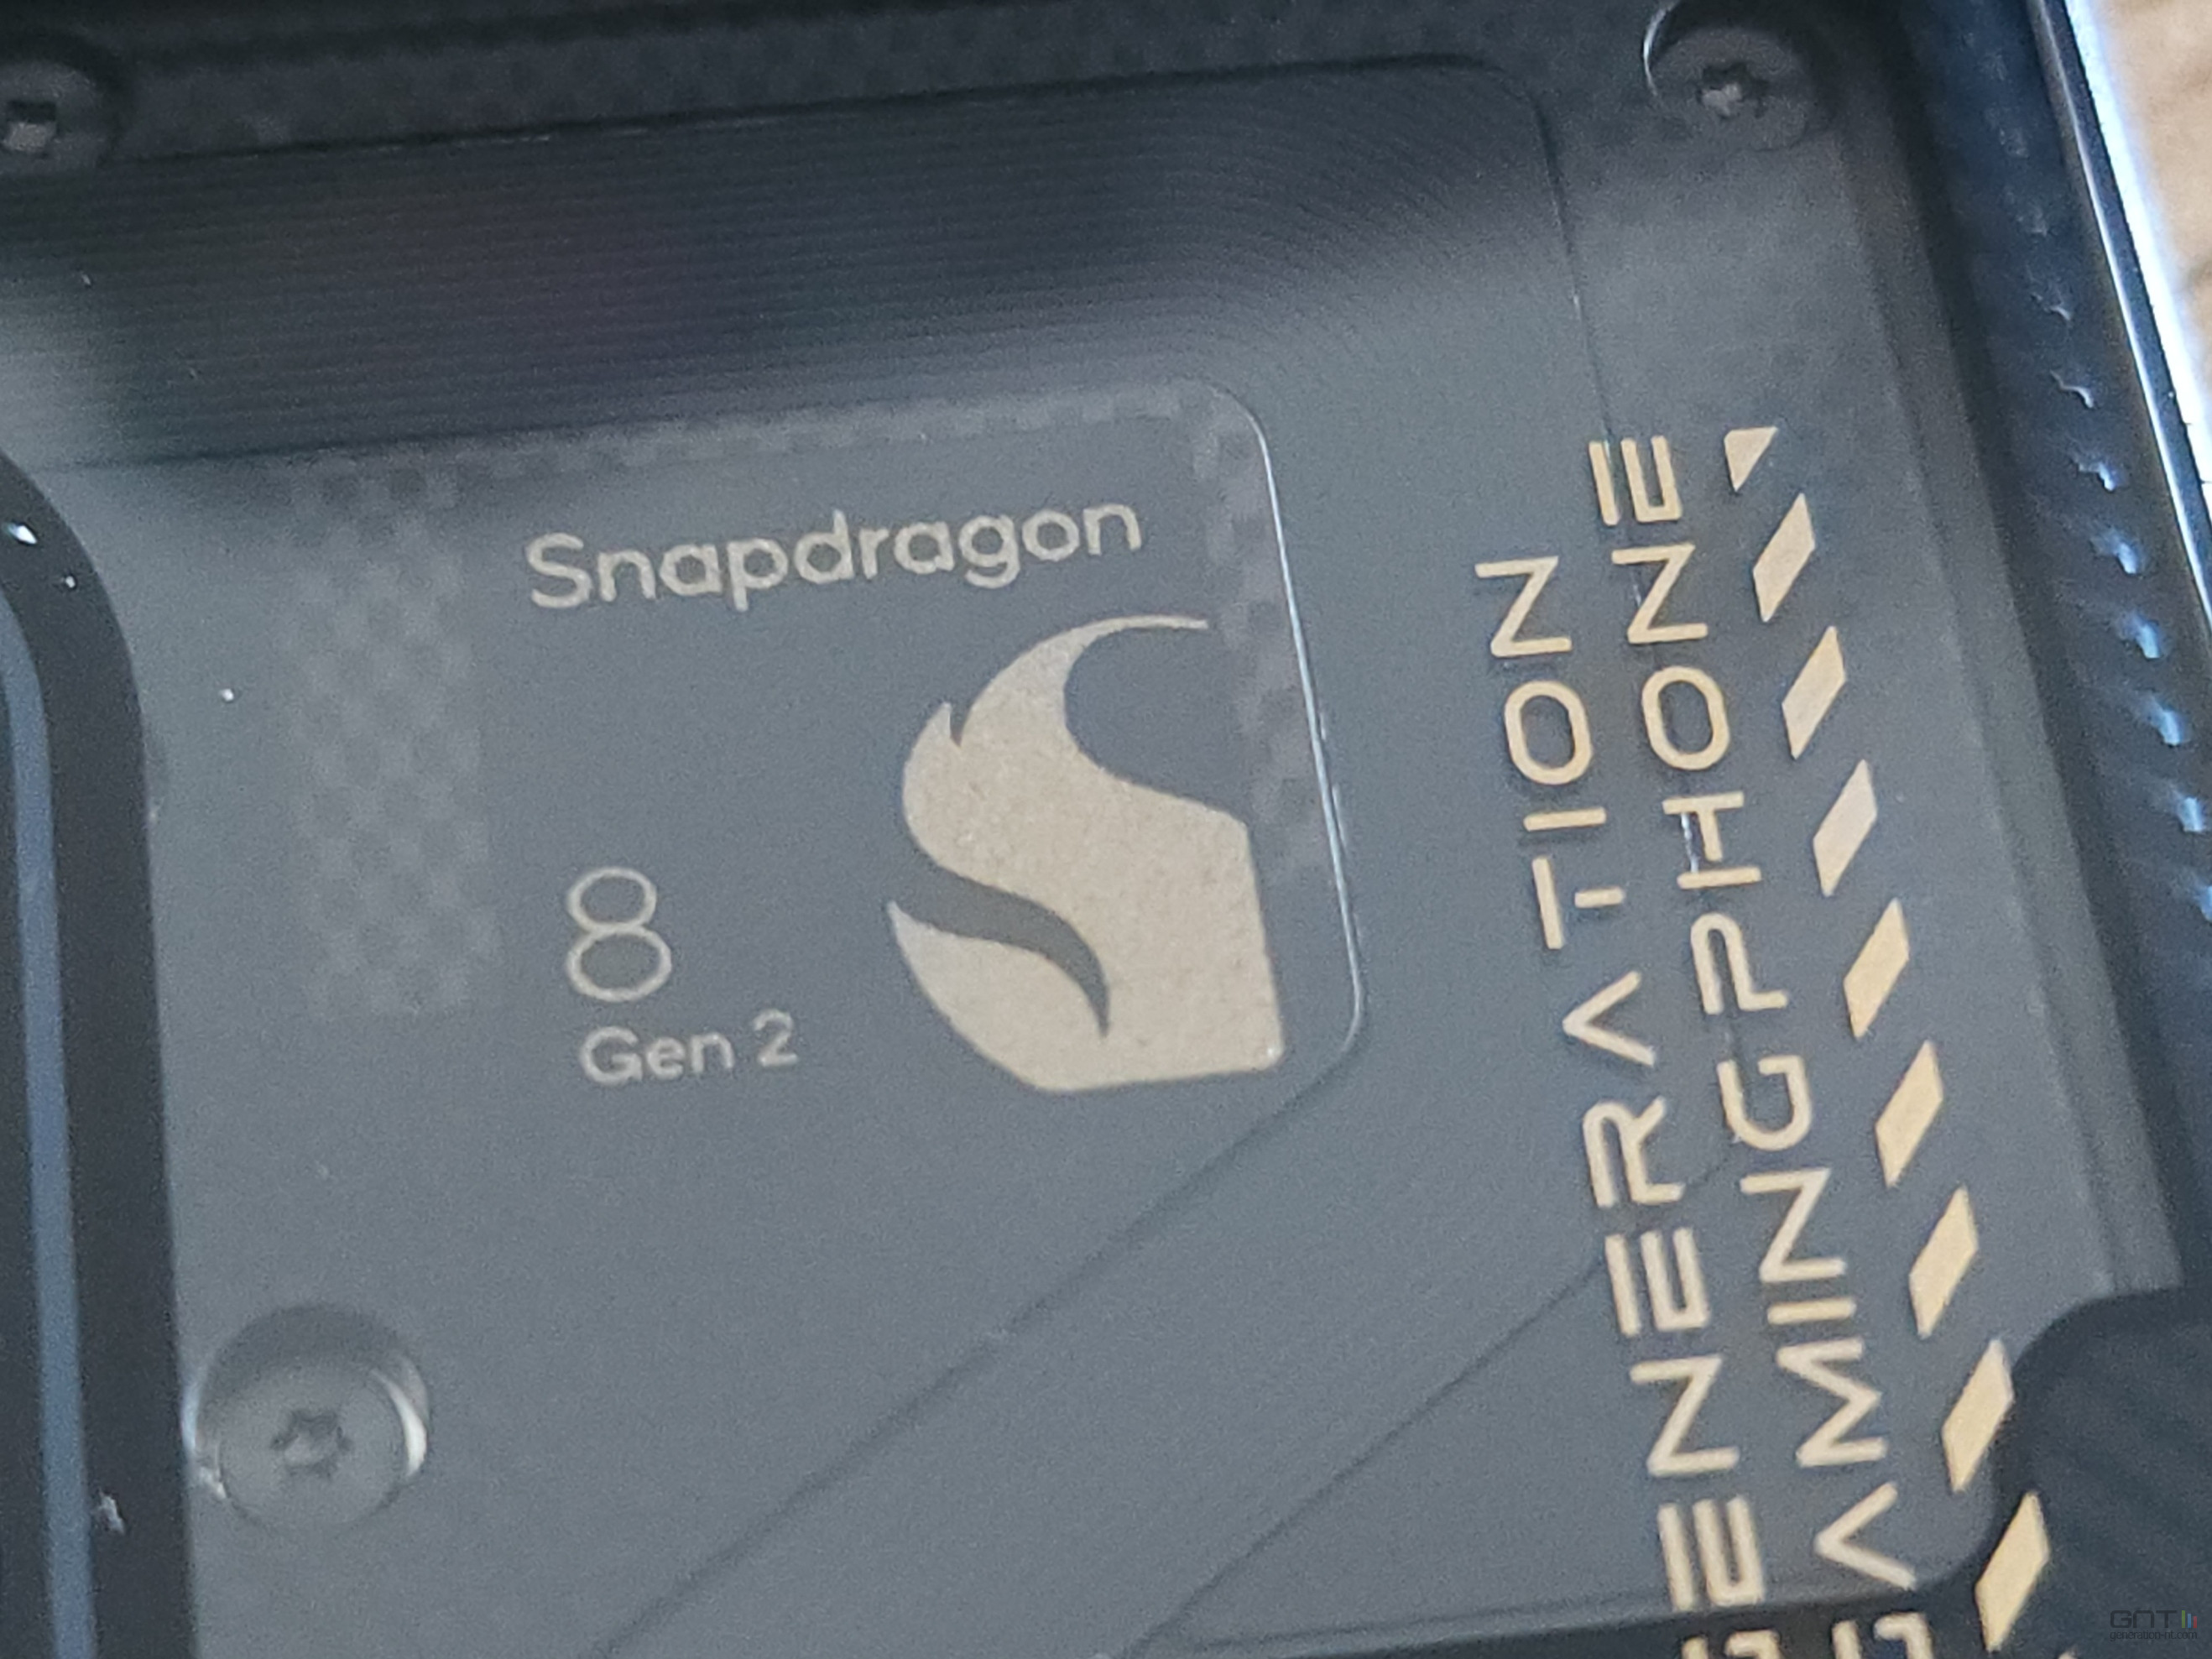 Redmagic 8 Pro Snapdragon 8 Gen 2